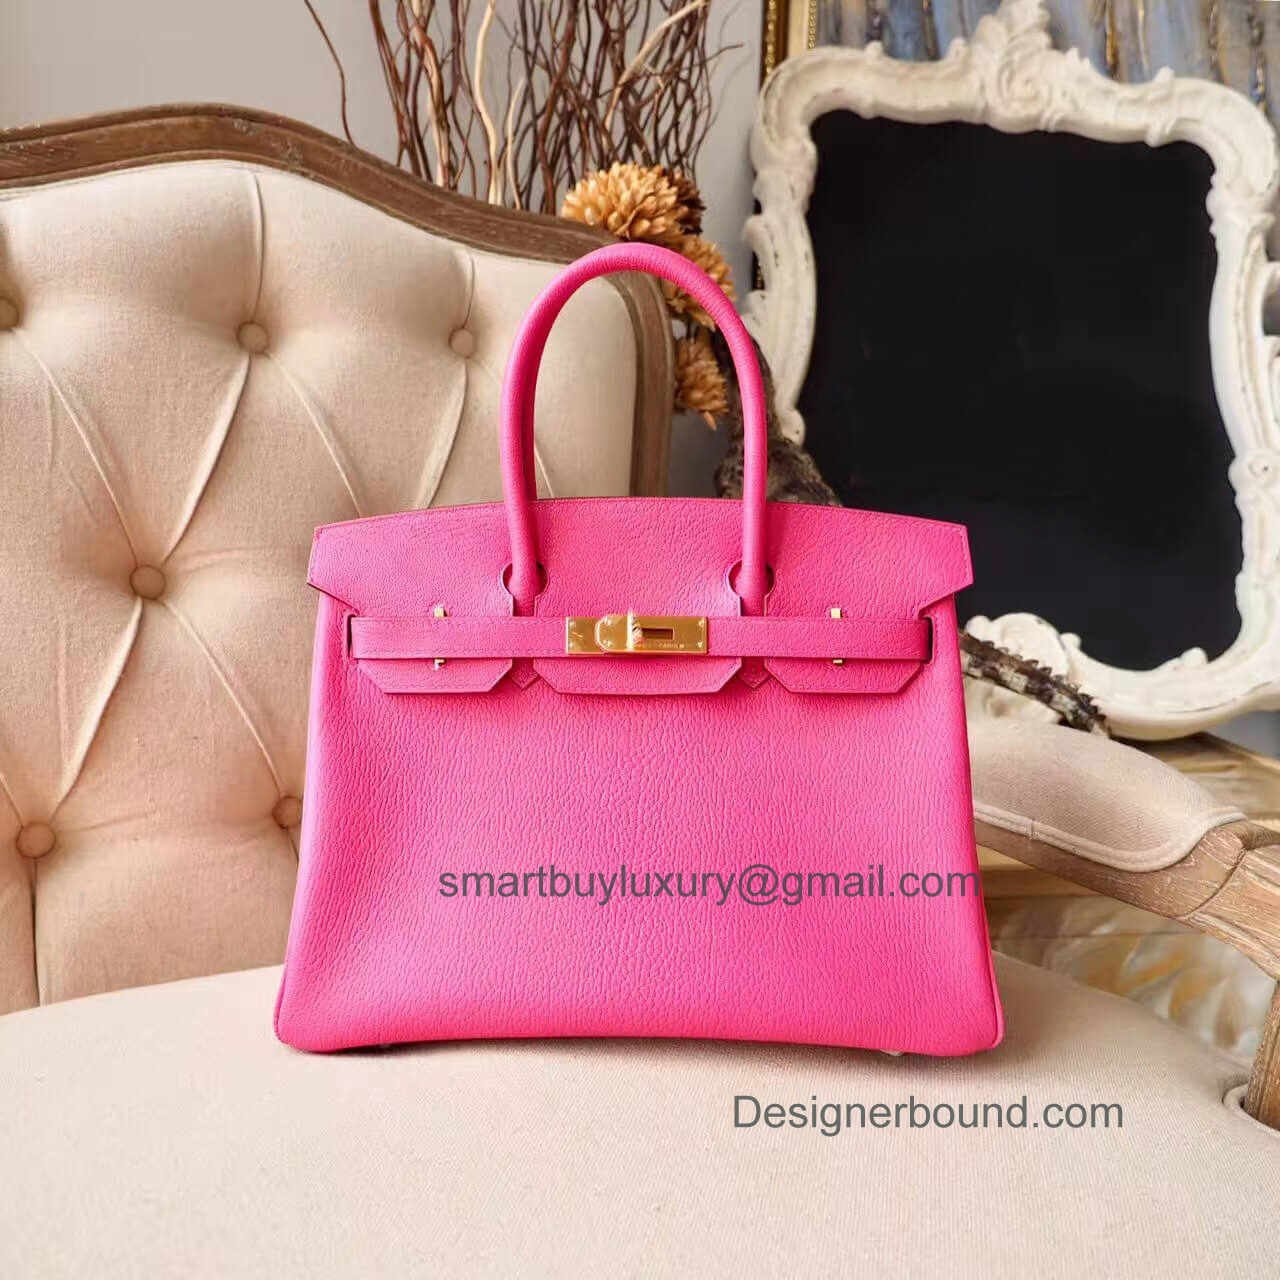 Hermes Birkin 30 Handbag in Bicolored 5r Rose Shocking Chevre Myzore GHW